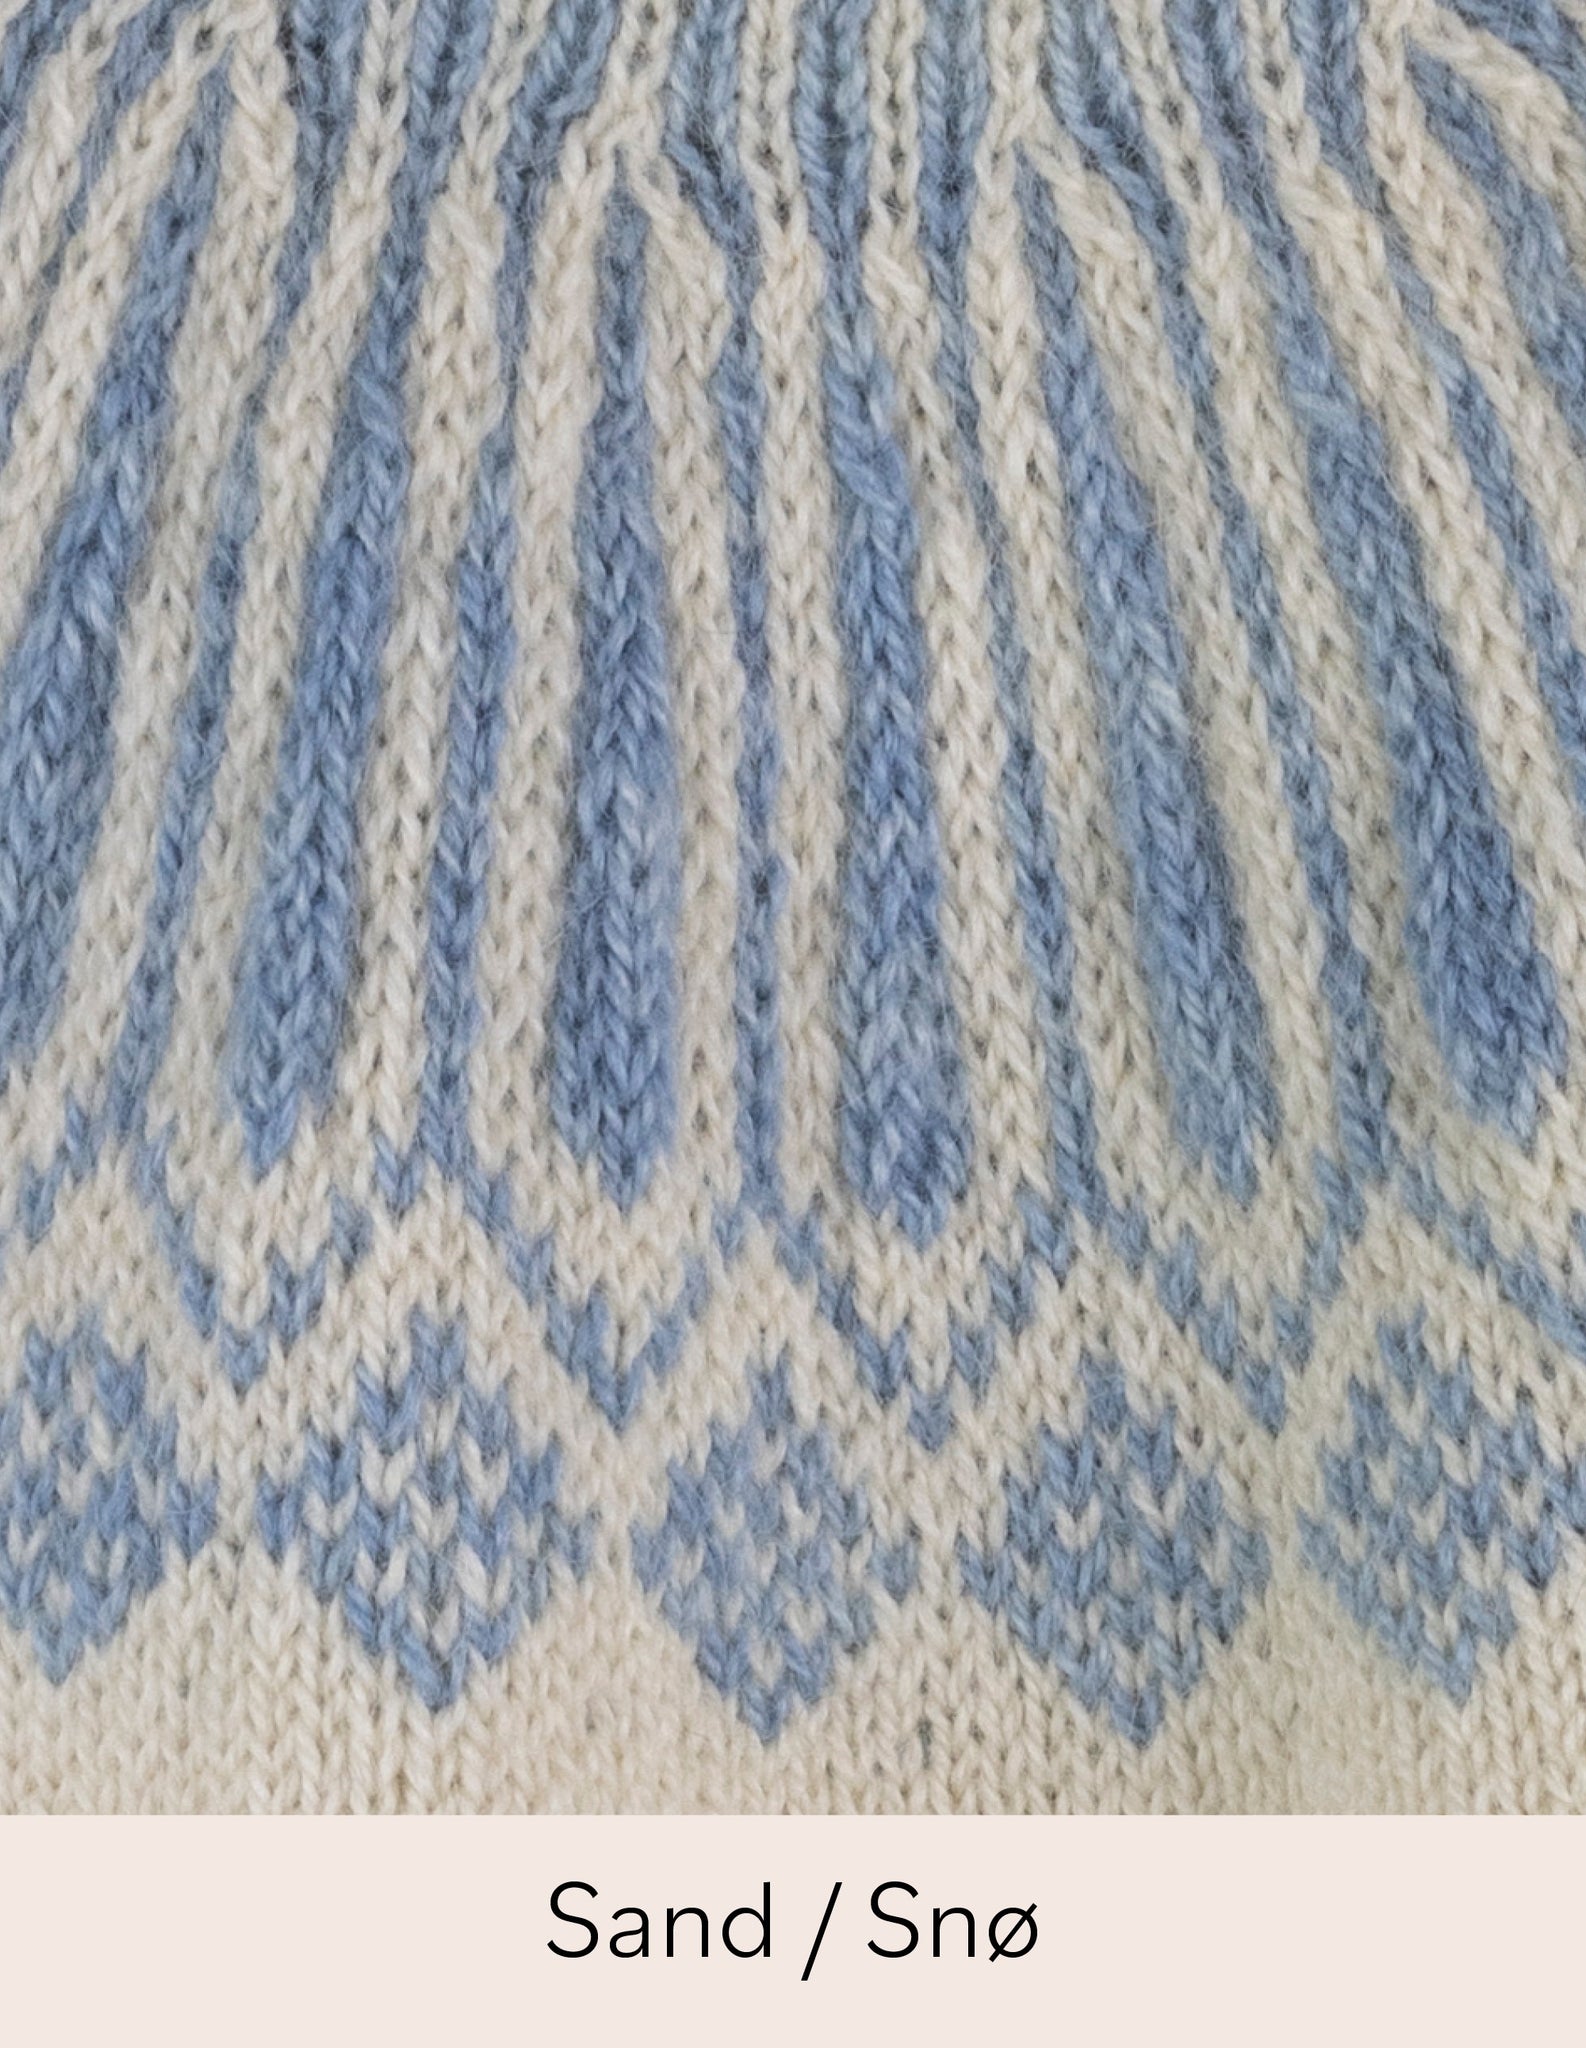 MARKUS, sweater in SAND, knitting kit